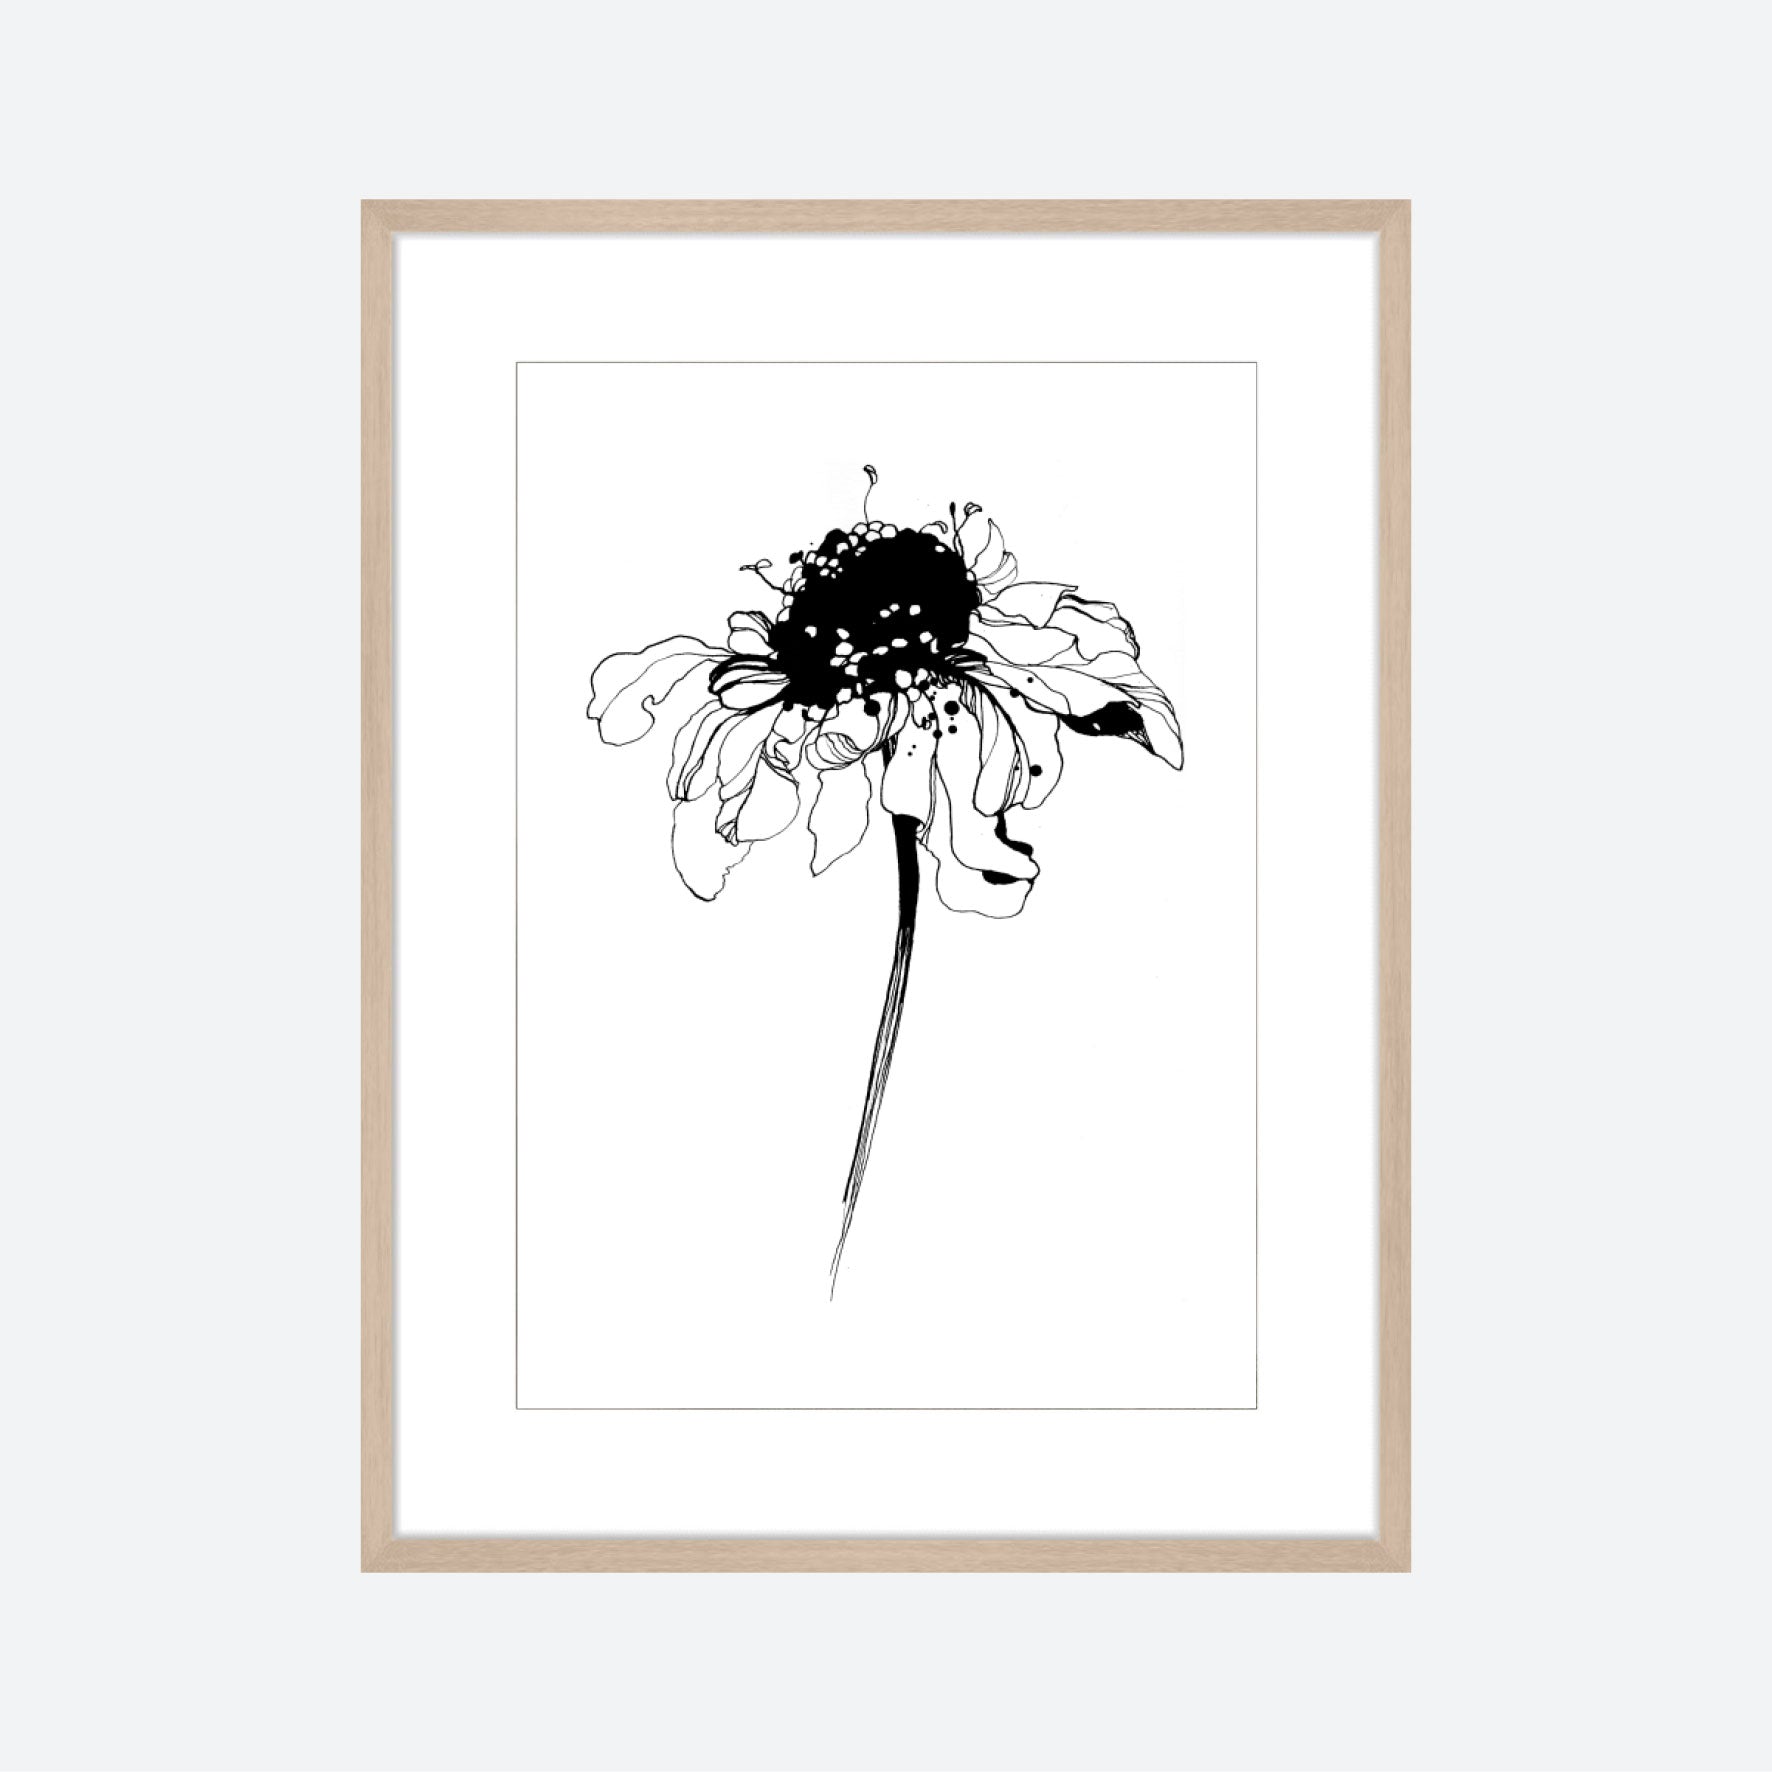 Toril Baekmark - Fine Art Prints - Black Flowers No.1